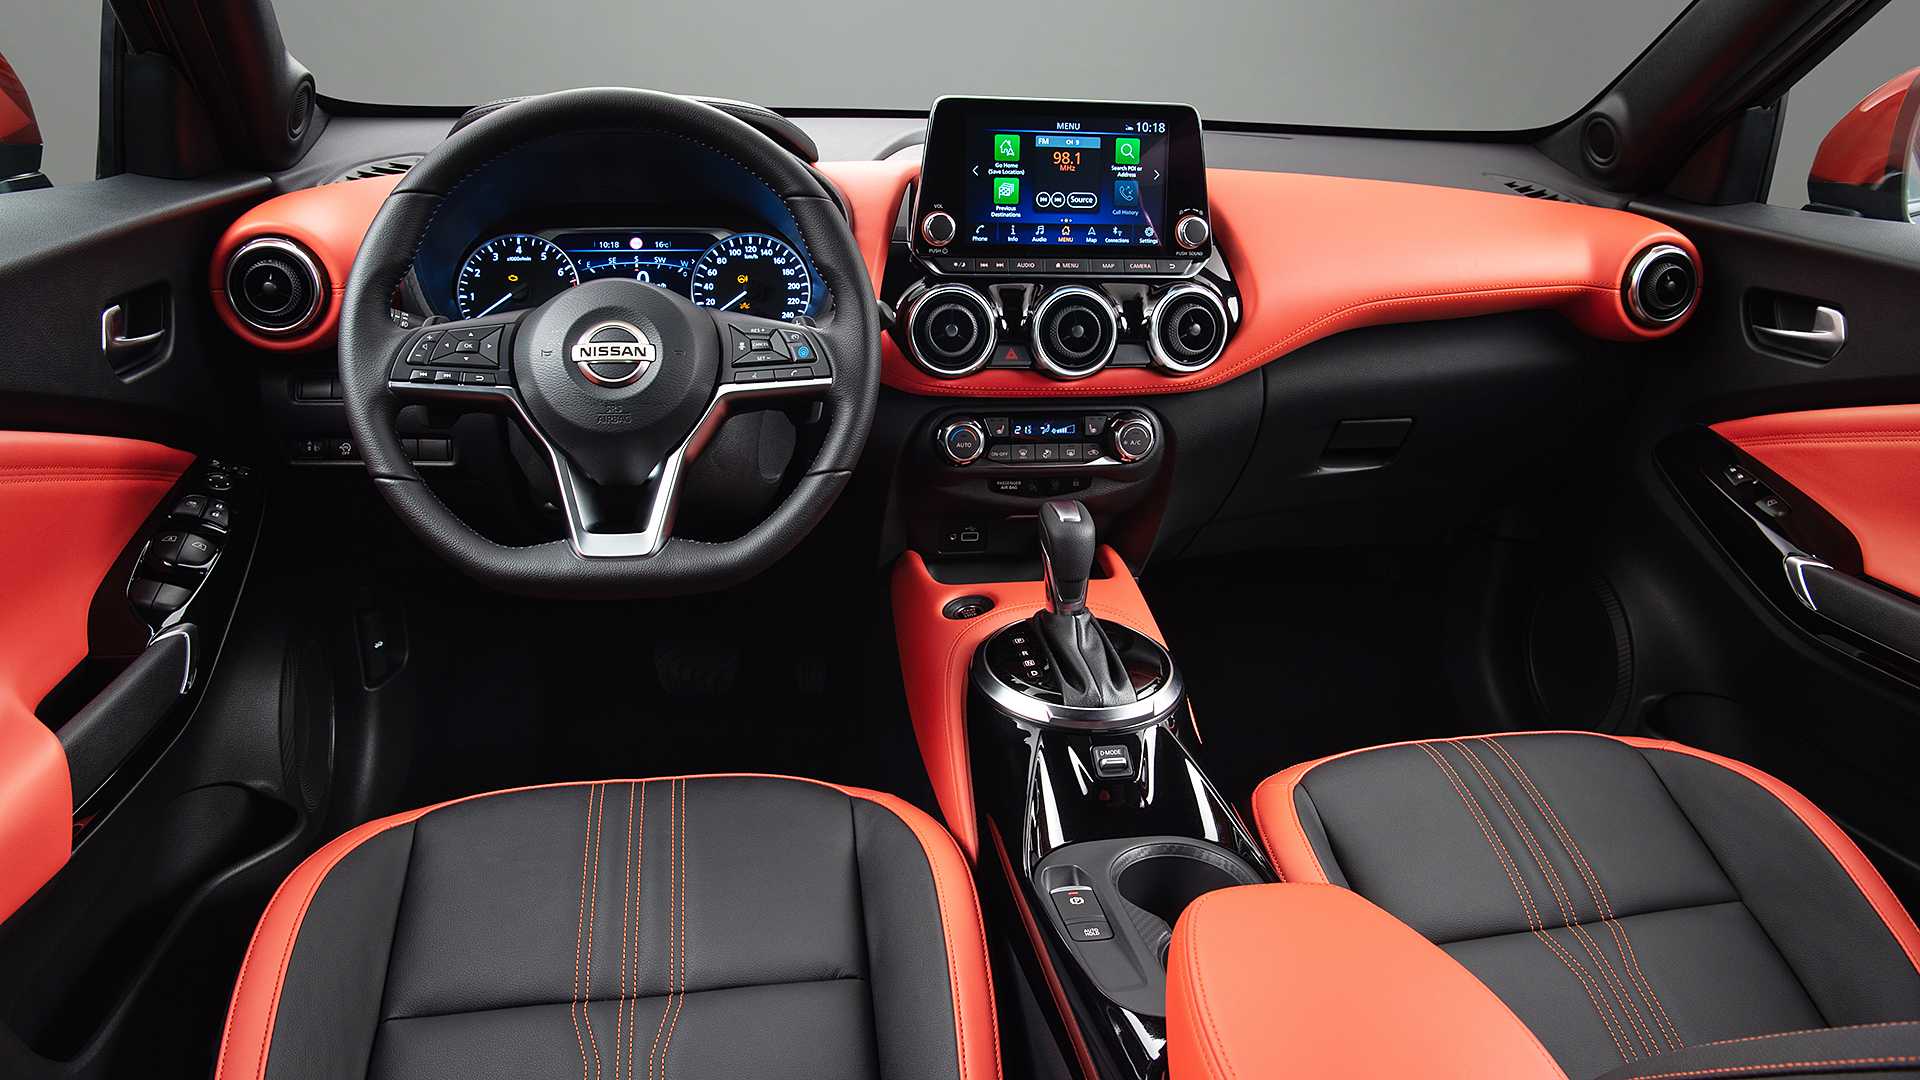 Nissan Juke interior - Cockpit